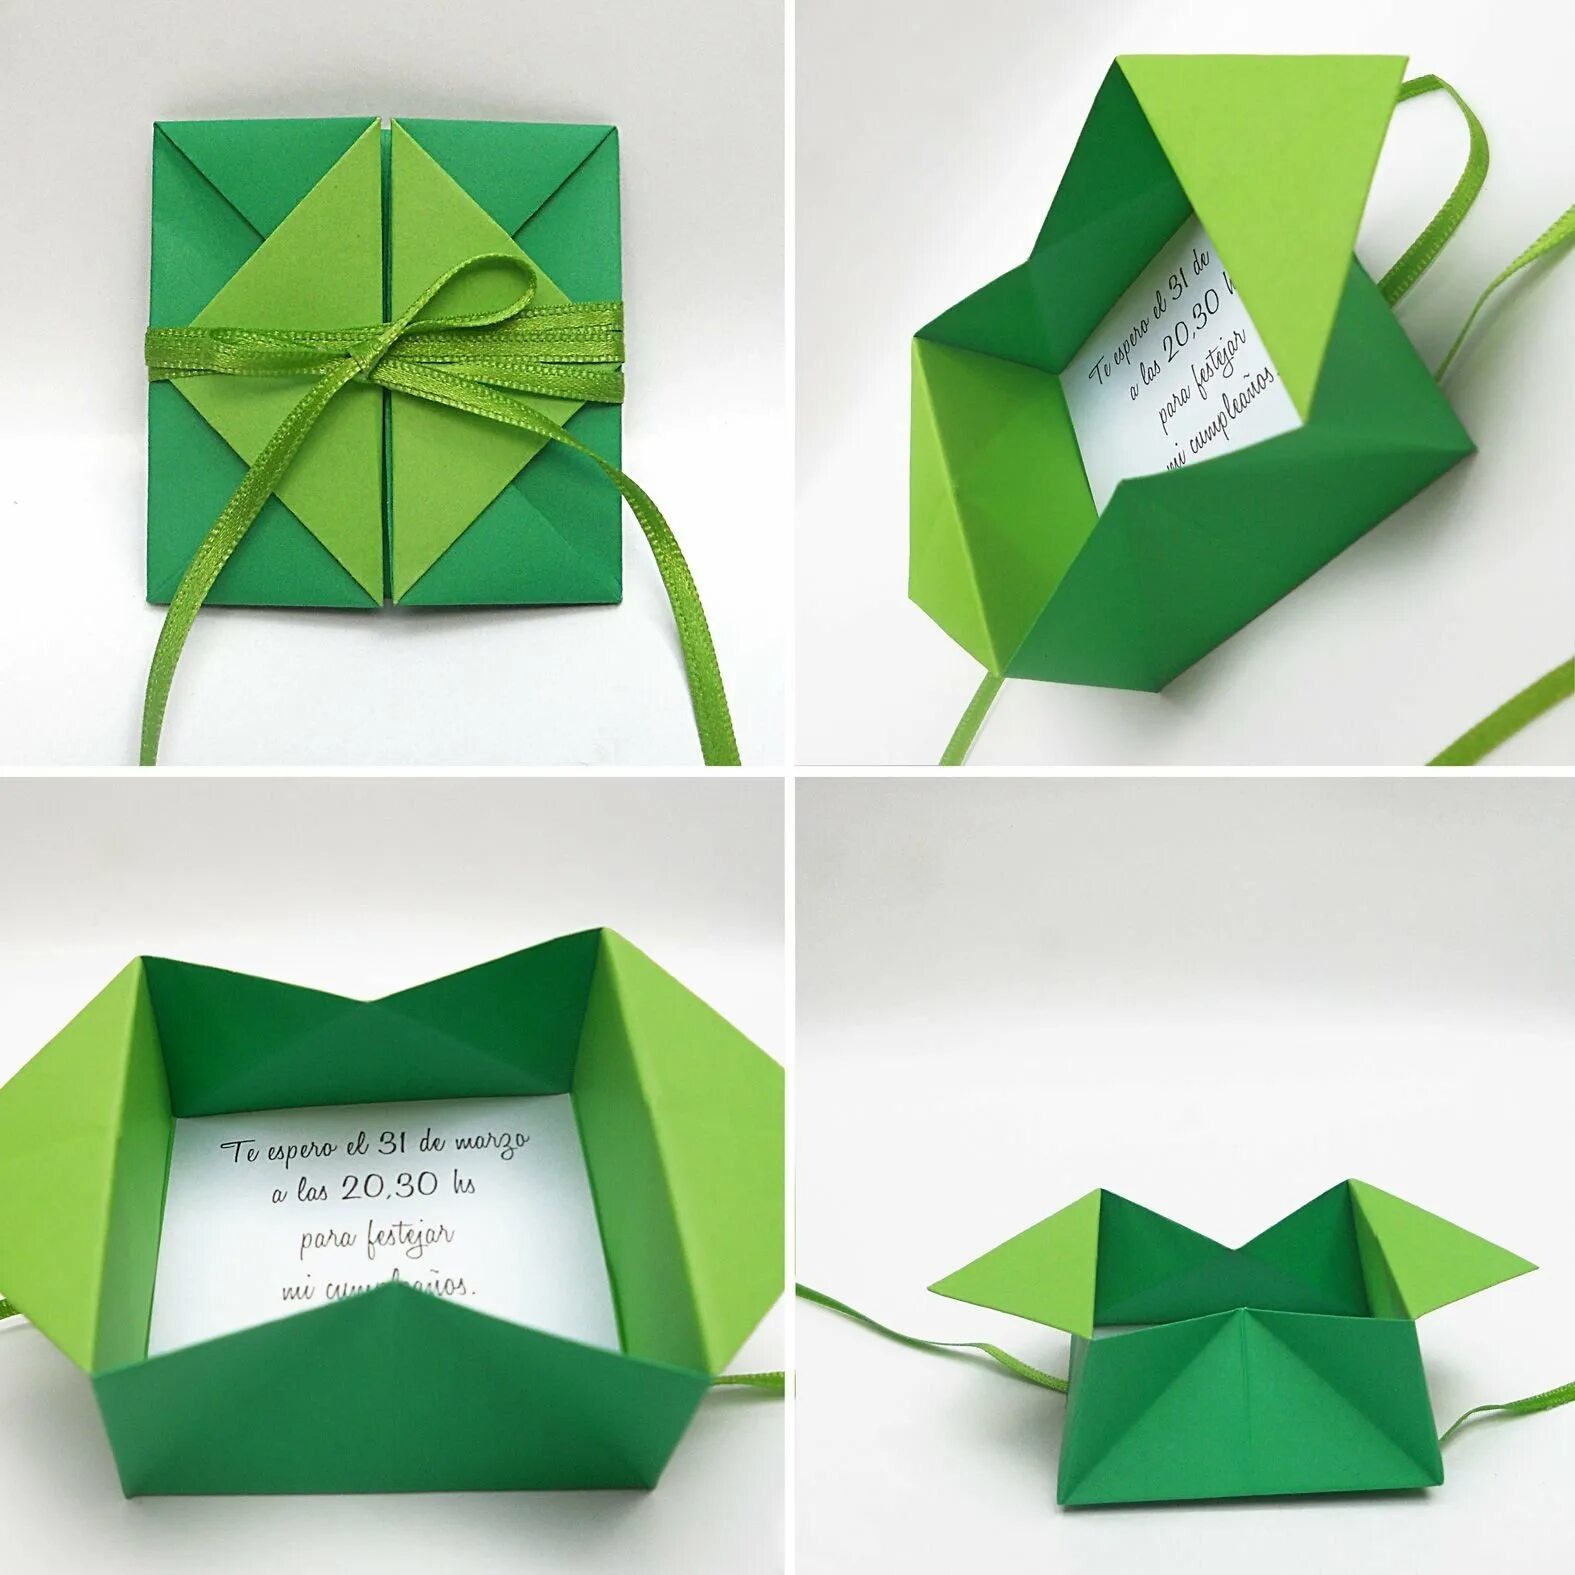 Оригами. Оригами упаковка для подарка. Оригами открытка. Оригами коробочка для подарка. Подарок из бумаги обычный